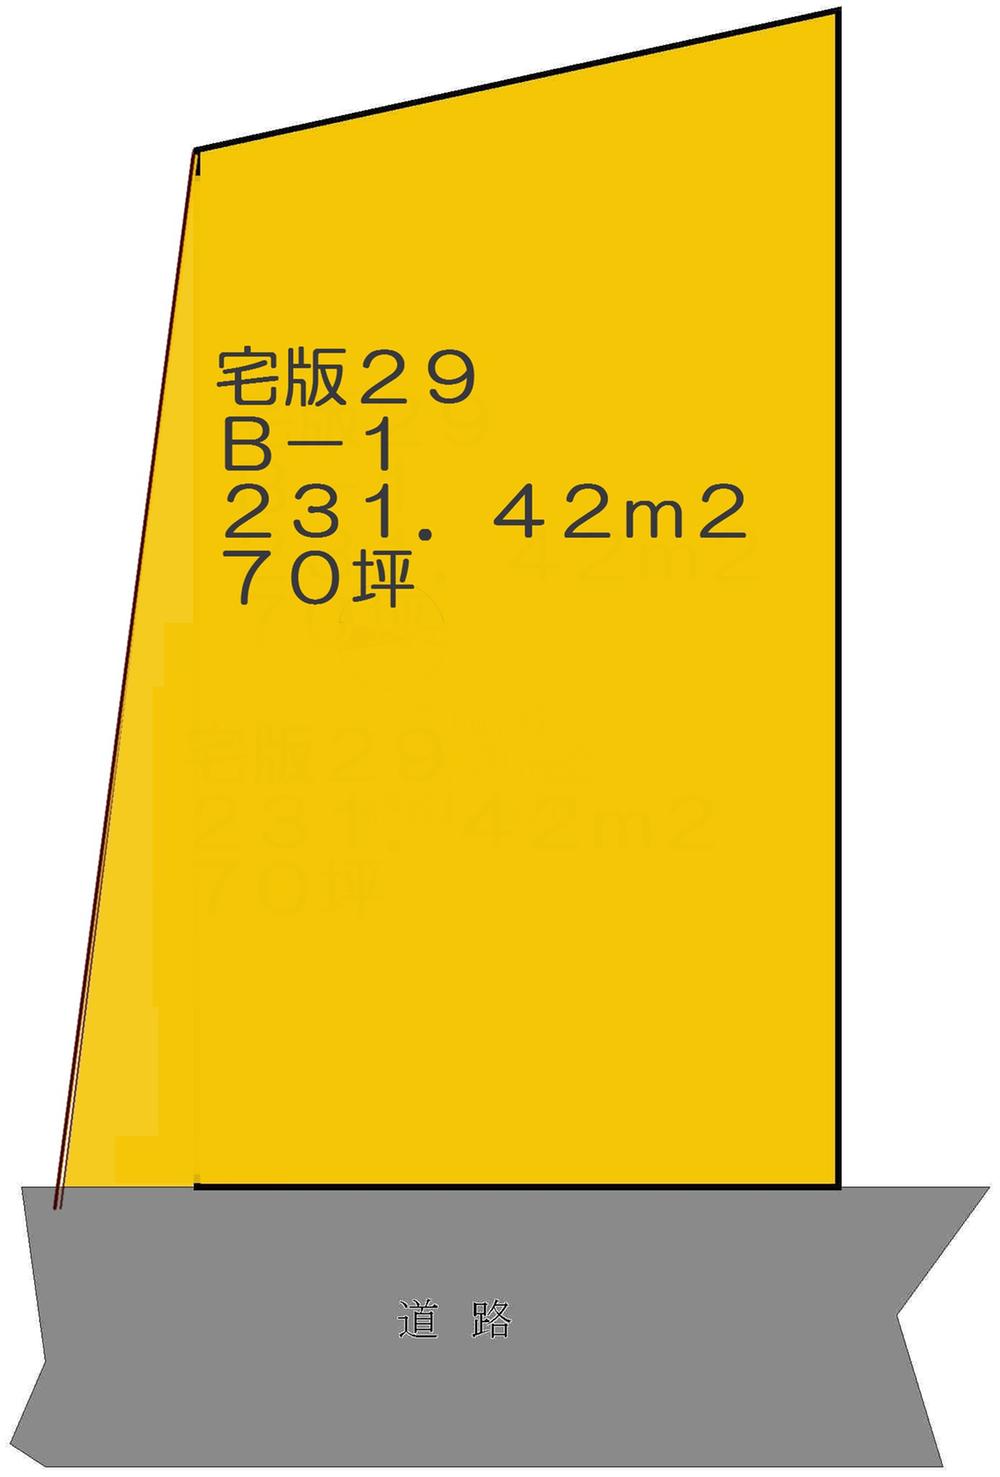 Compartment figure. Land price 5.25 million yen, Land area 231.42 sq m